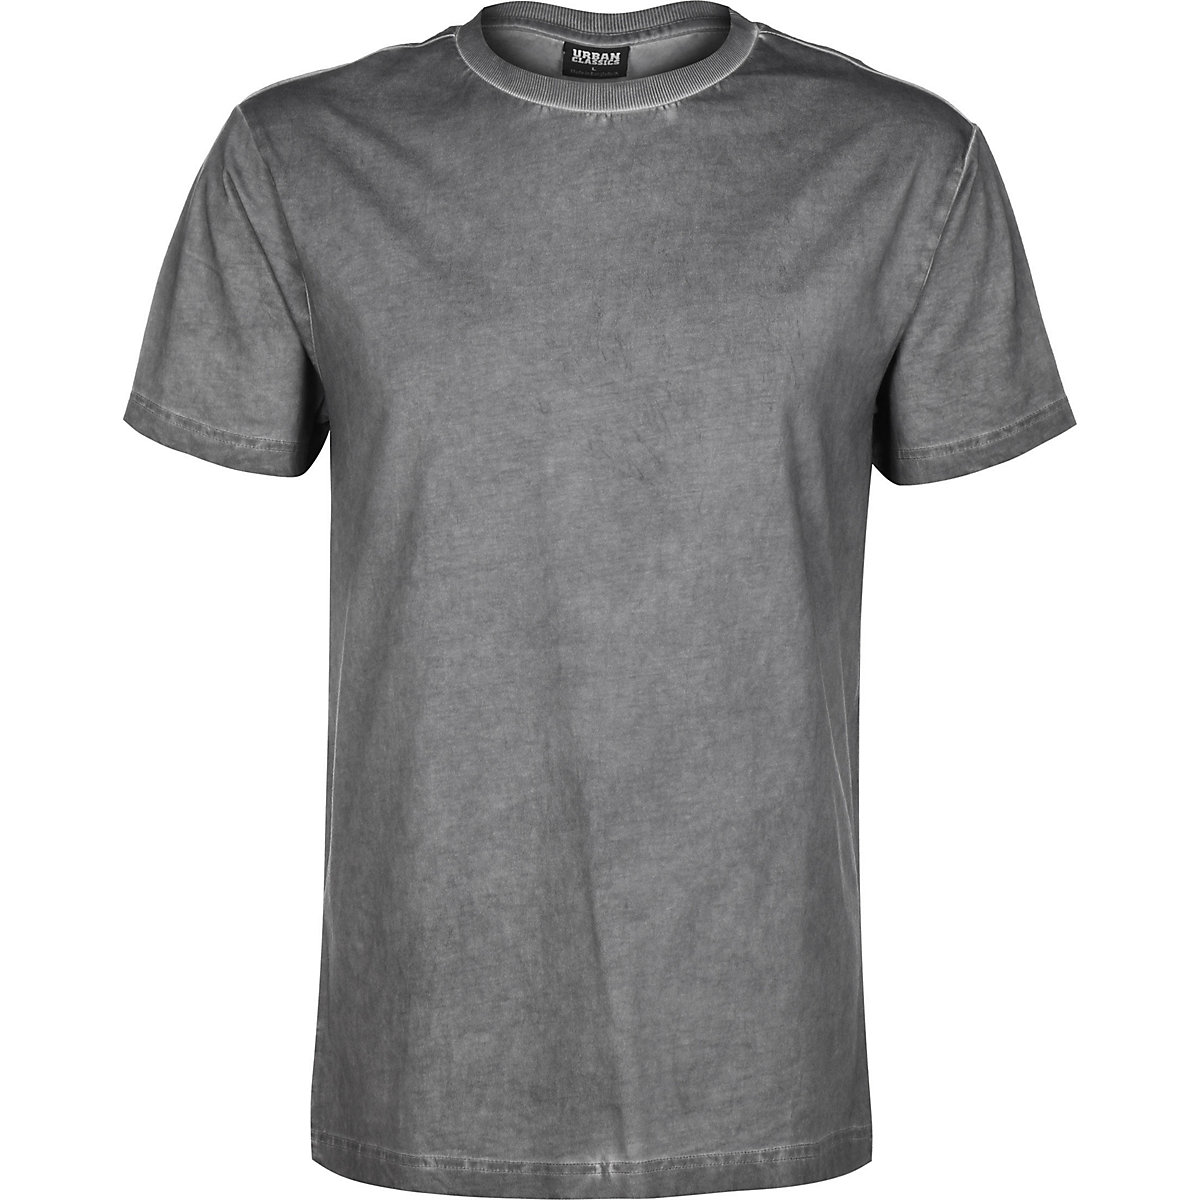 Urban Classics Urban Classics T-Shirt Grunge T-Shirts grau